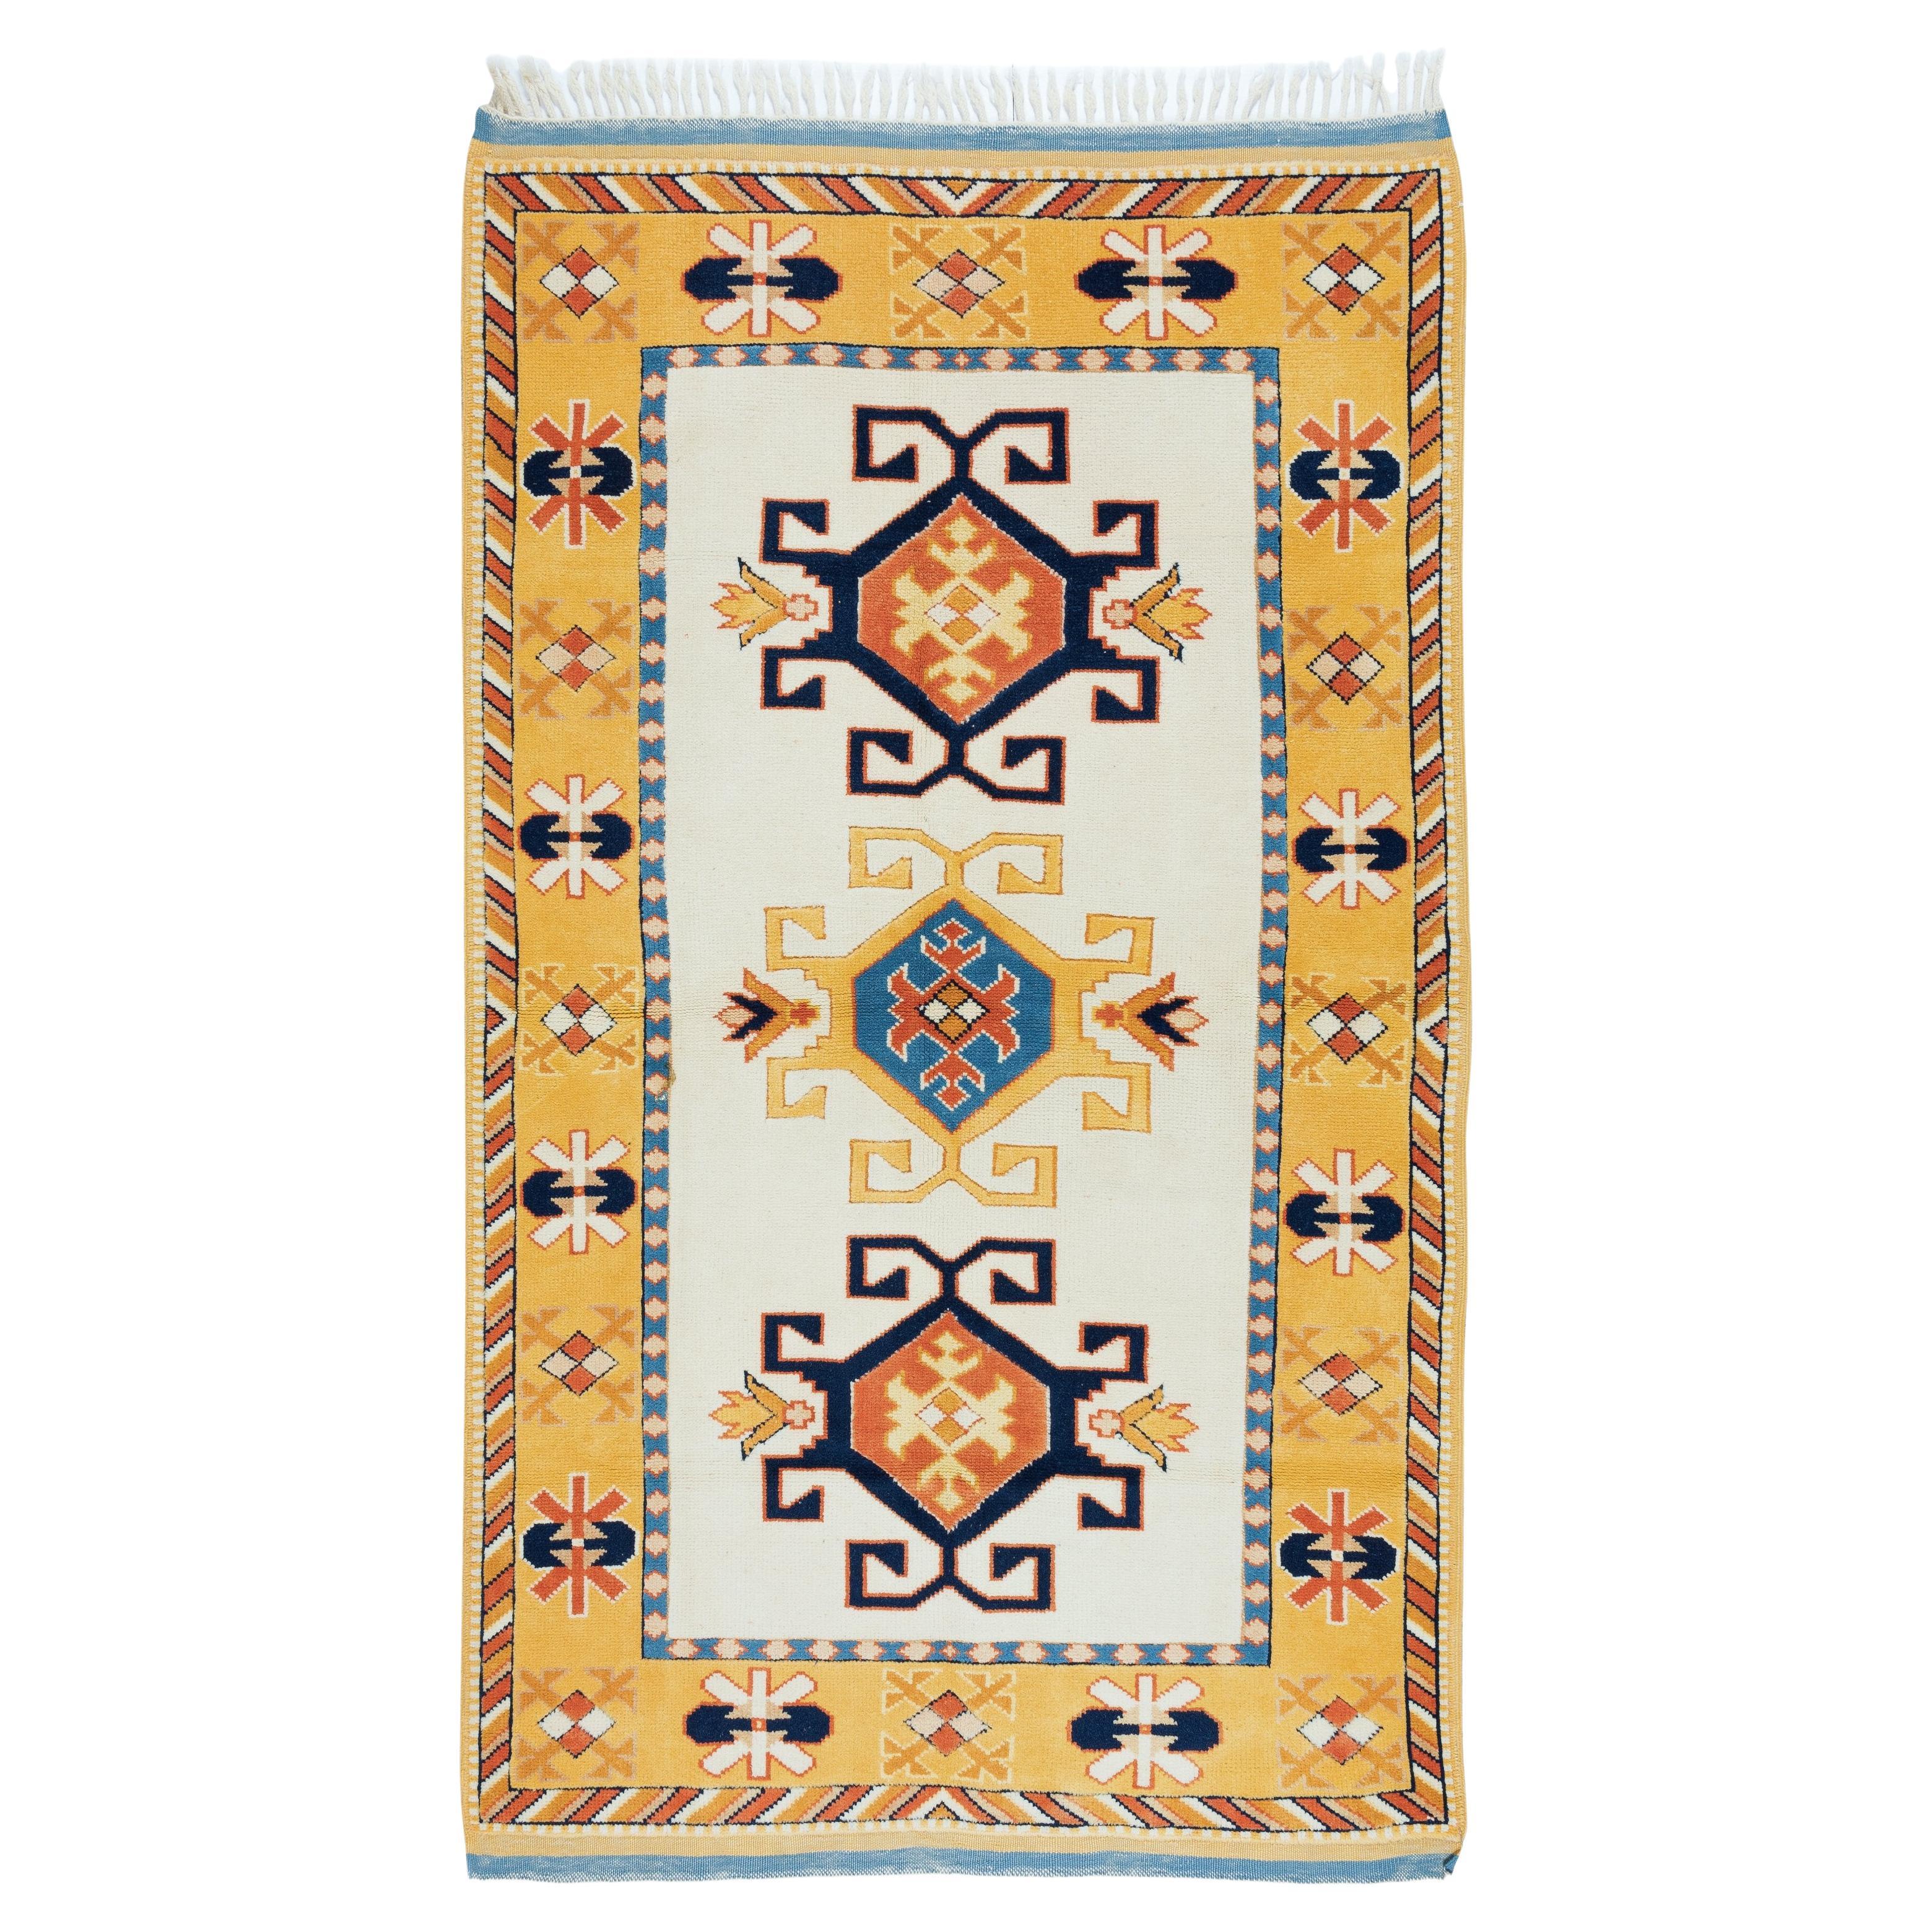 4x6 Ft Vintage Handmade Turkish Wool Rug with Geometric Design, Ca 1970 For Sale